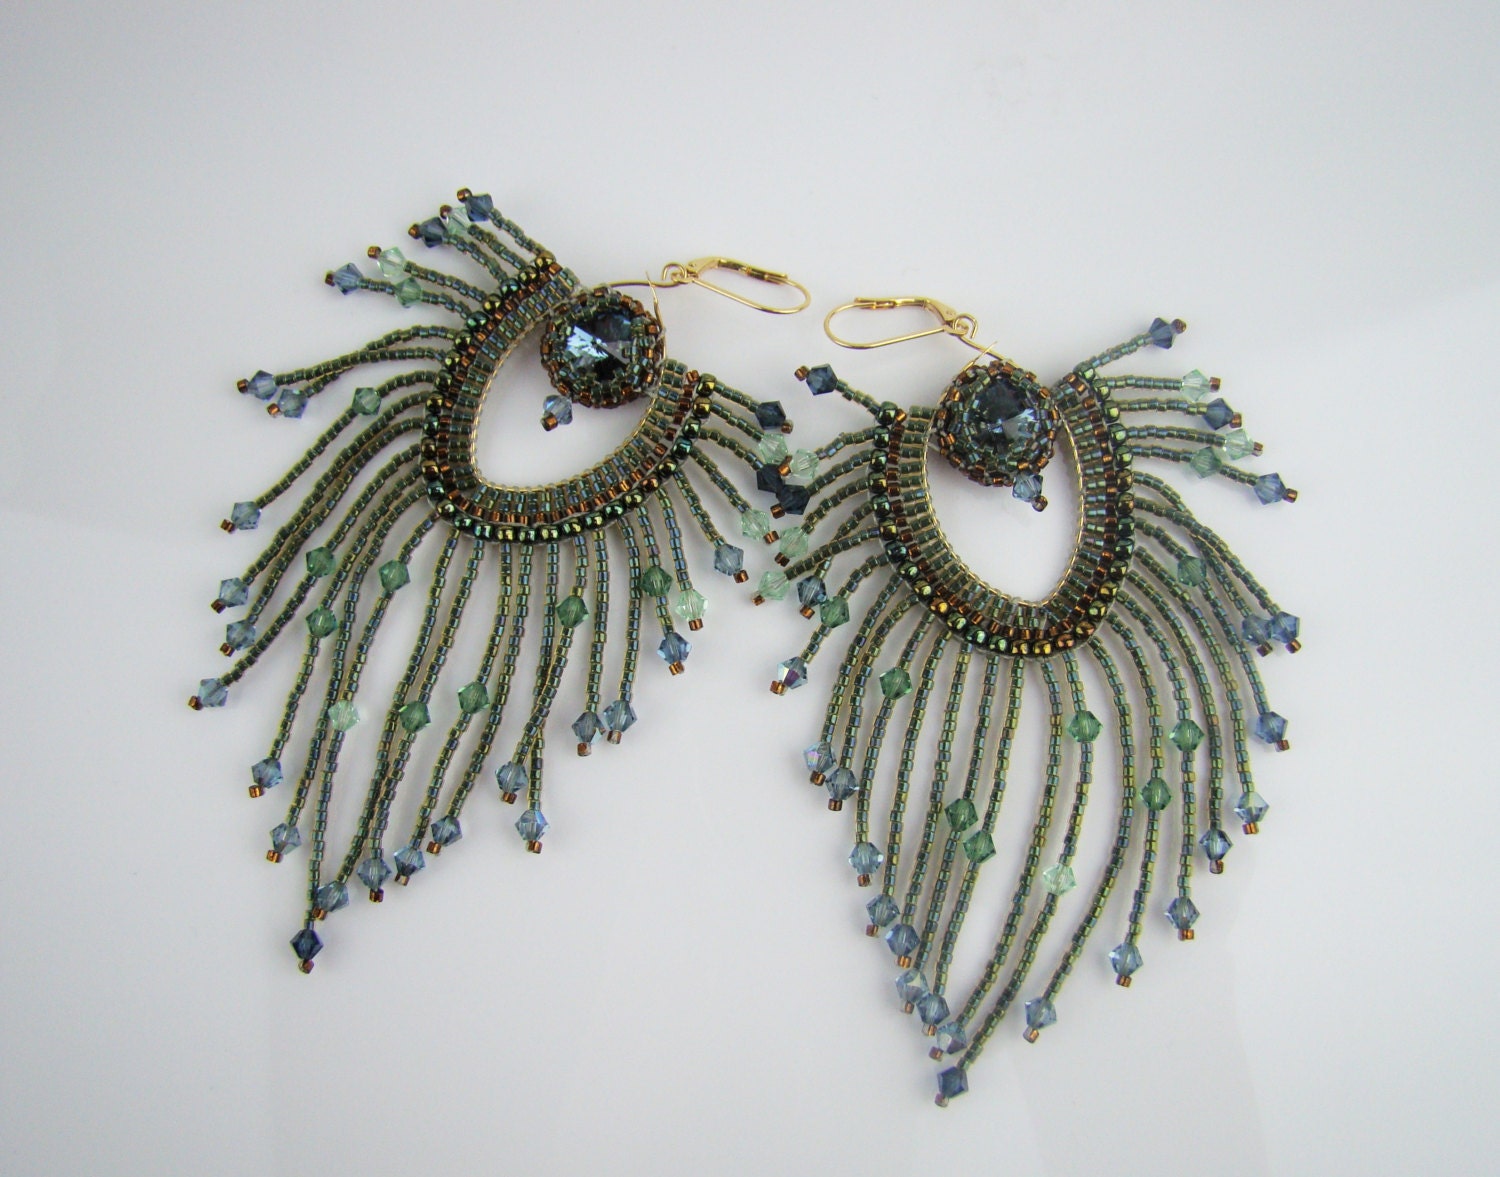 Peacock earrings,  seed bead fringe earrings, green blue, ooak seed bead earrings, handcrafted jewelry, 7PM boutique - 7PMboutique